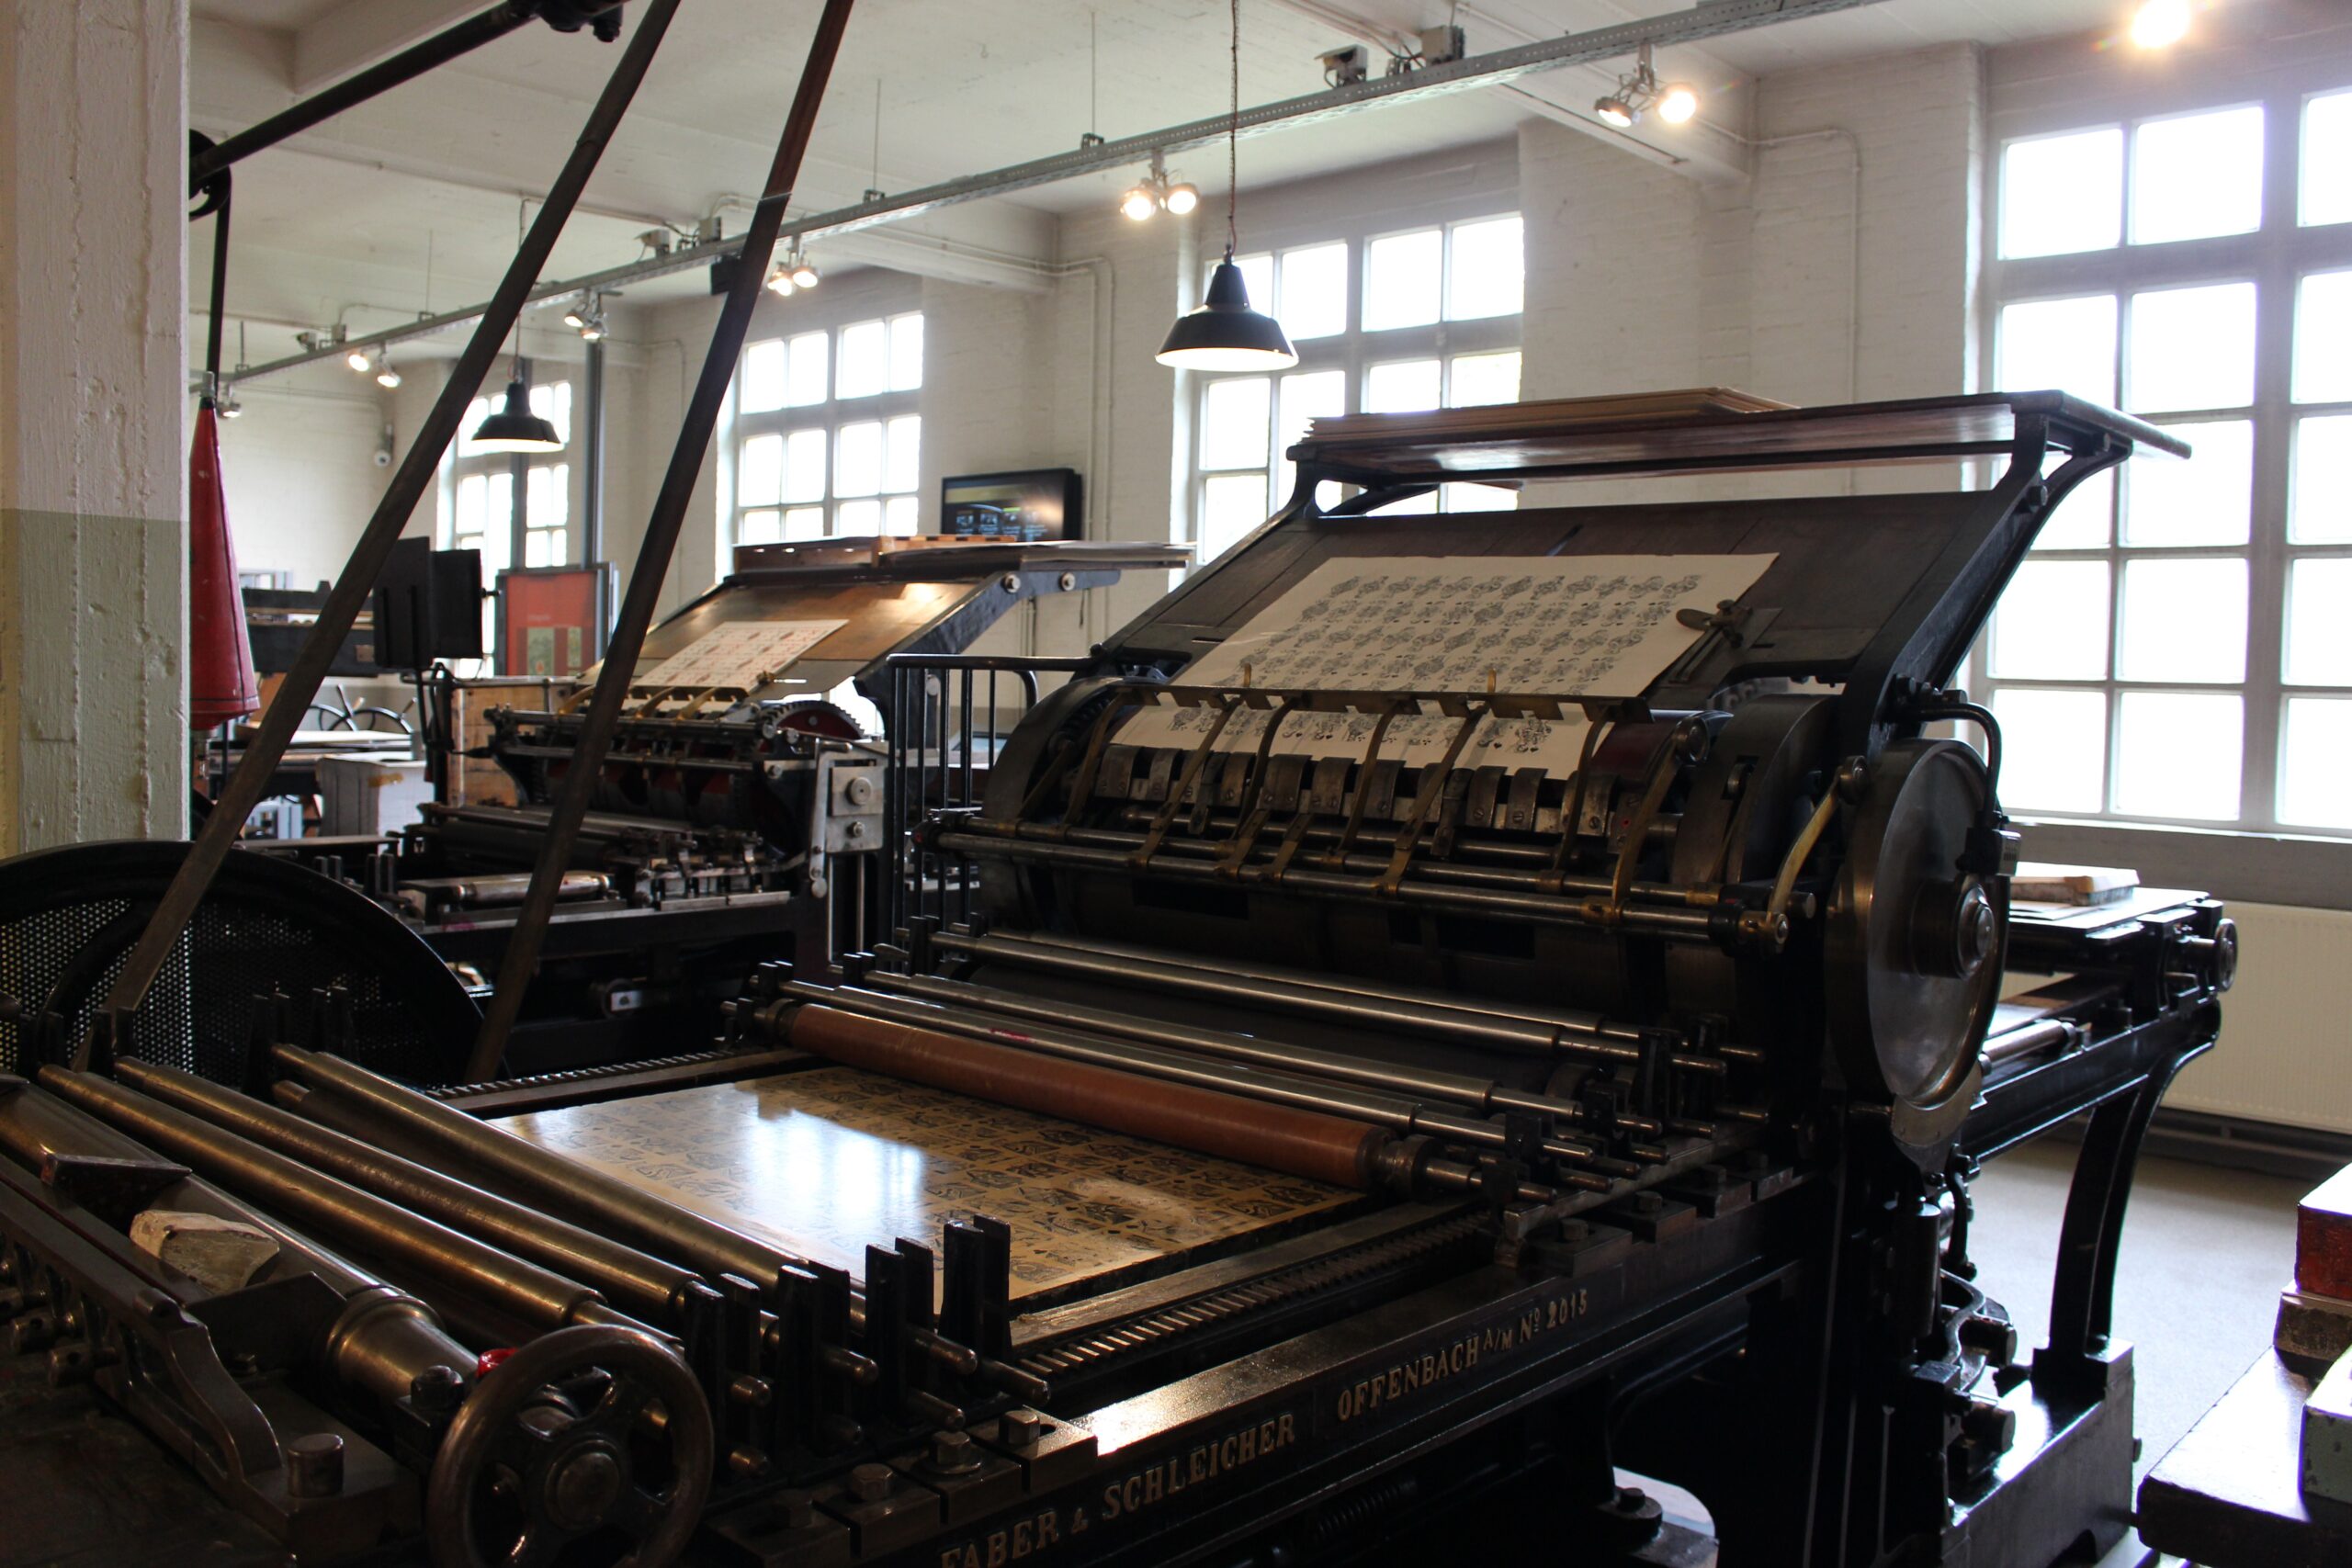 Evolving Platforms: The Printing Press